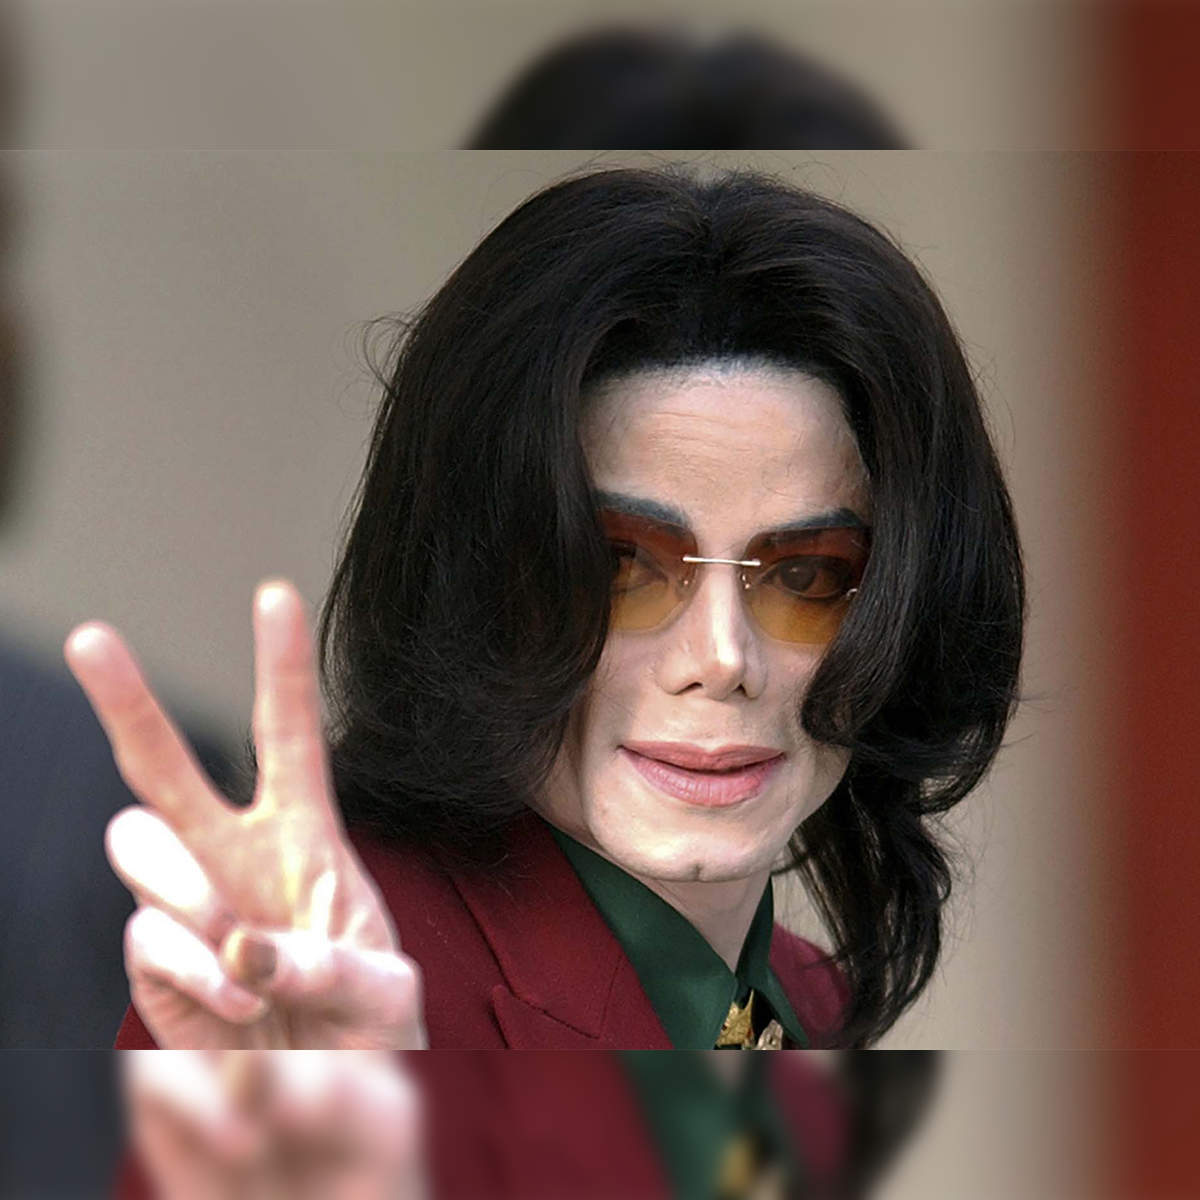 Michael Jackson Billie Jean Glove - Limited Time Offer